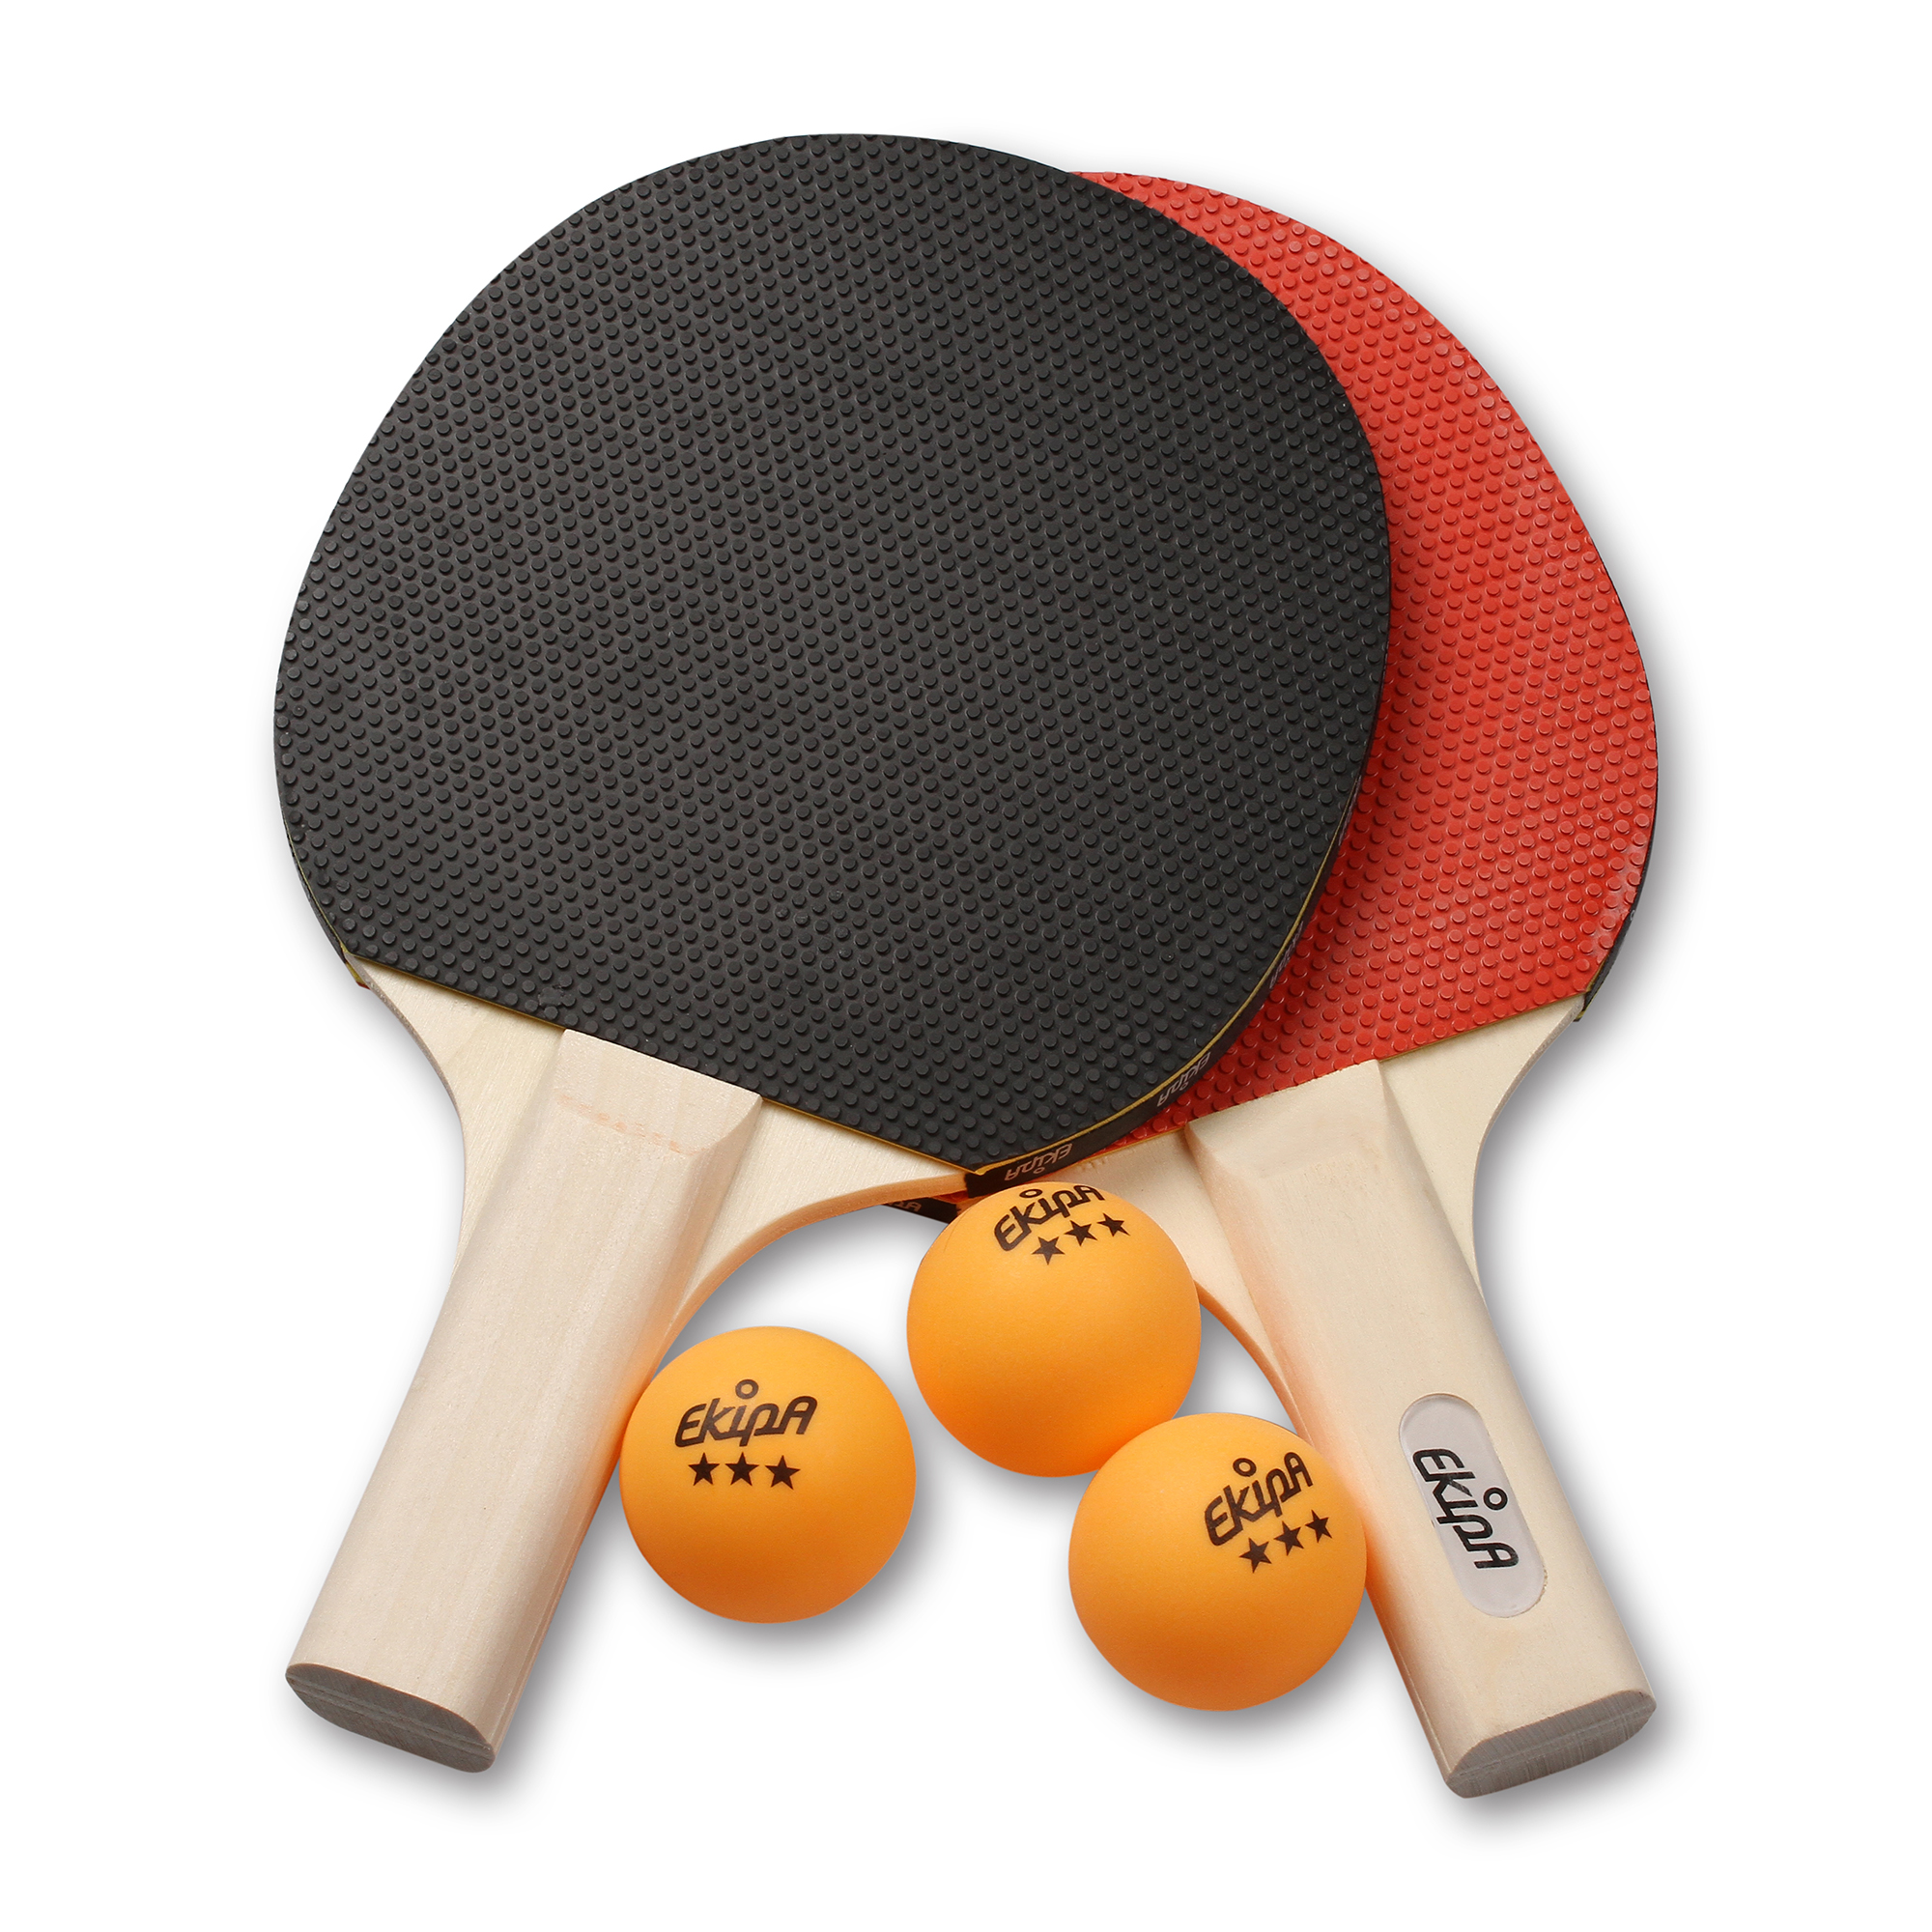 Характеристики ракетки для настольного тенниса. Atemi 600 ракетка для настольного тенниса 3 звезды. Ракетка RBV 4002h для настольного тенниса. Теннисная ракетка атеми. Набор для настольного тенниса (2 ракетки, 3 шарика).